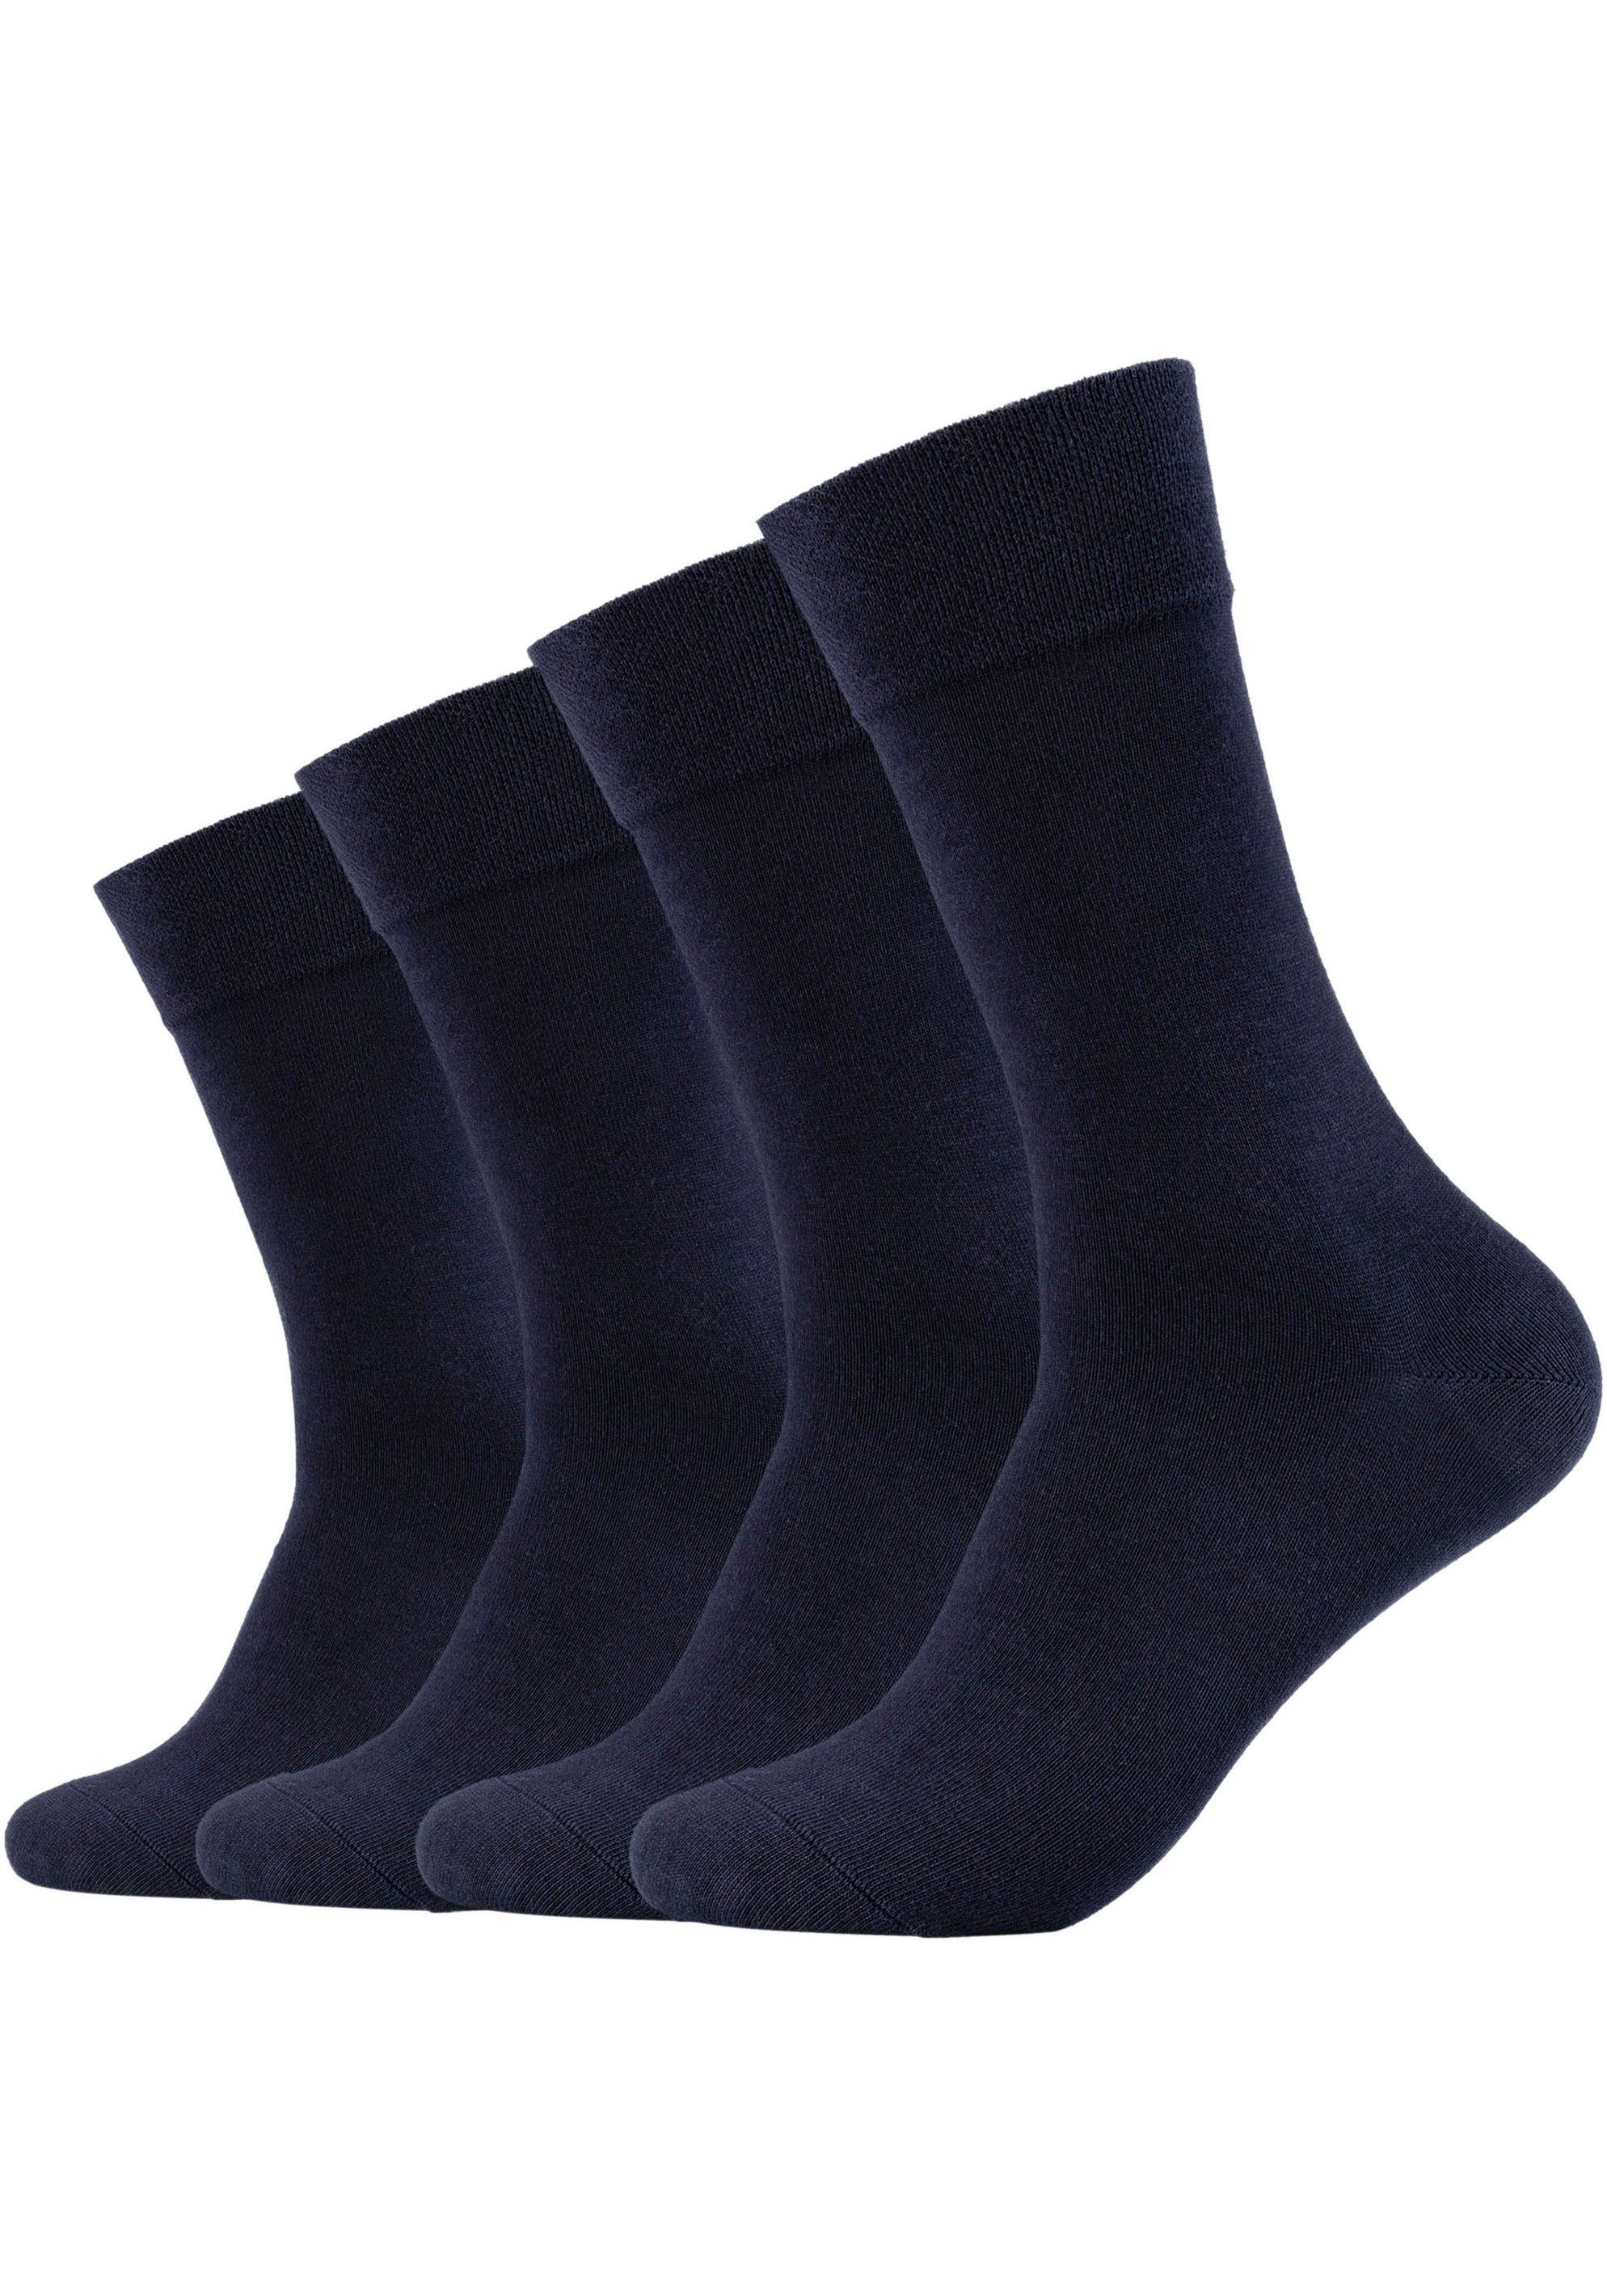 97% 4-Paar) Bio-Baumwolle navy Socken Atmungsaktiv: Camano (Packung,